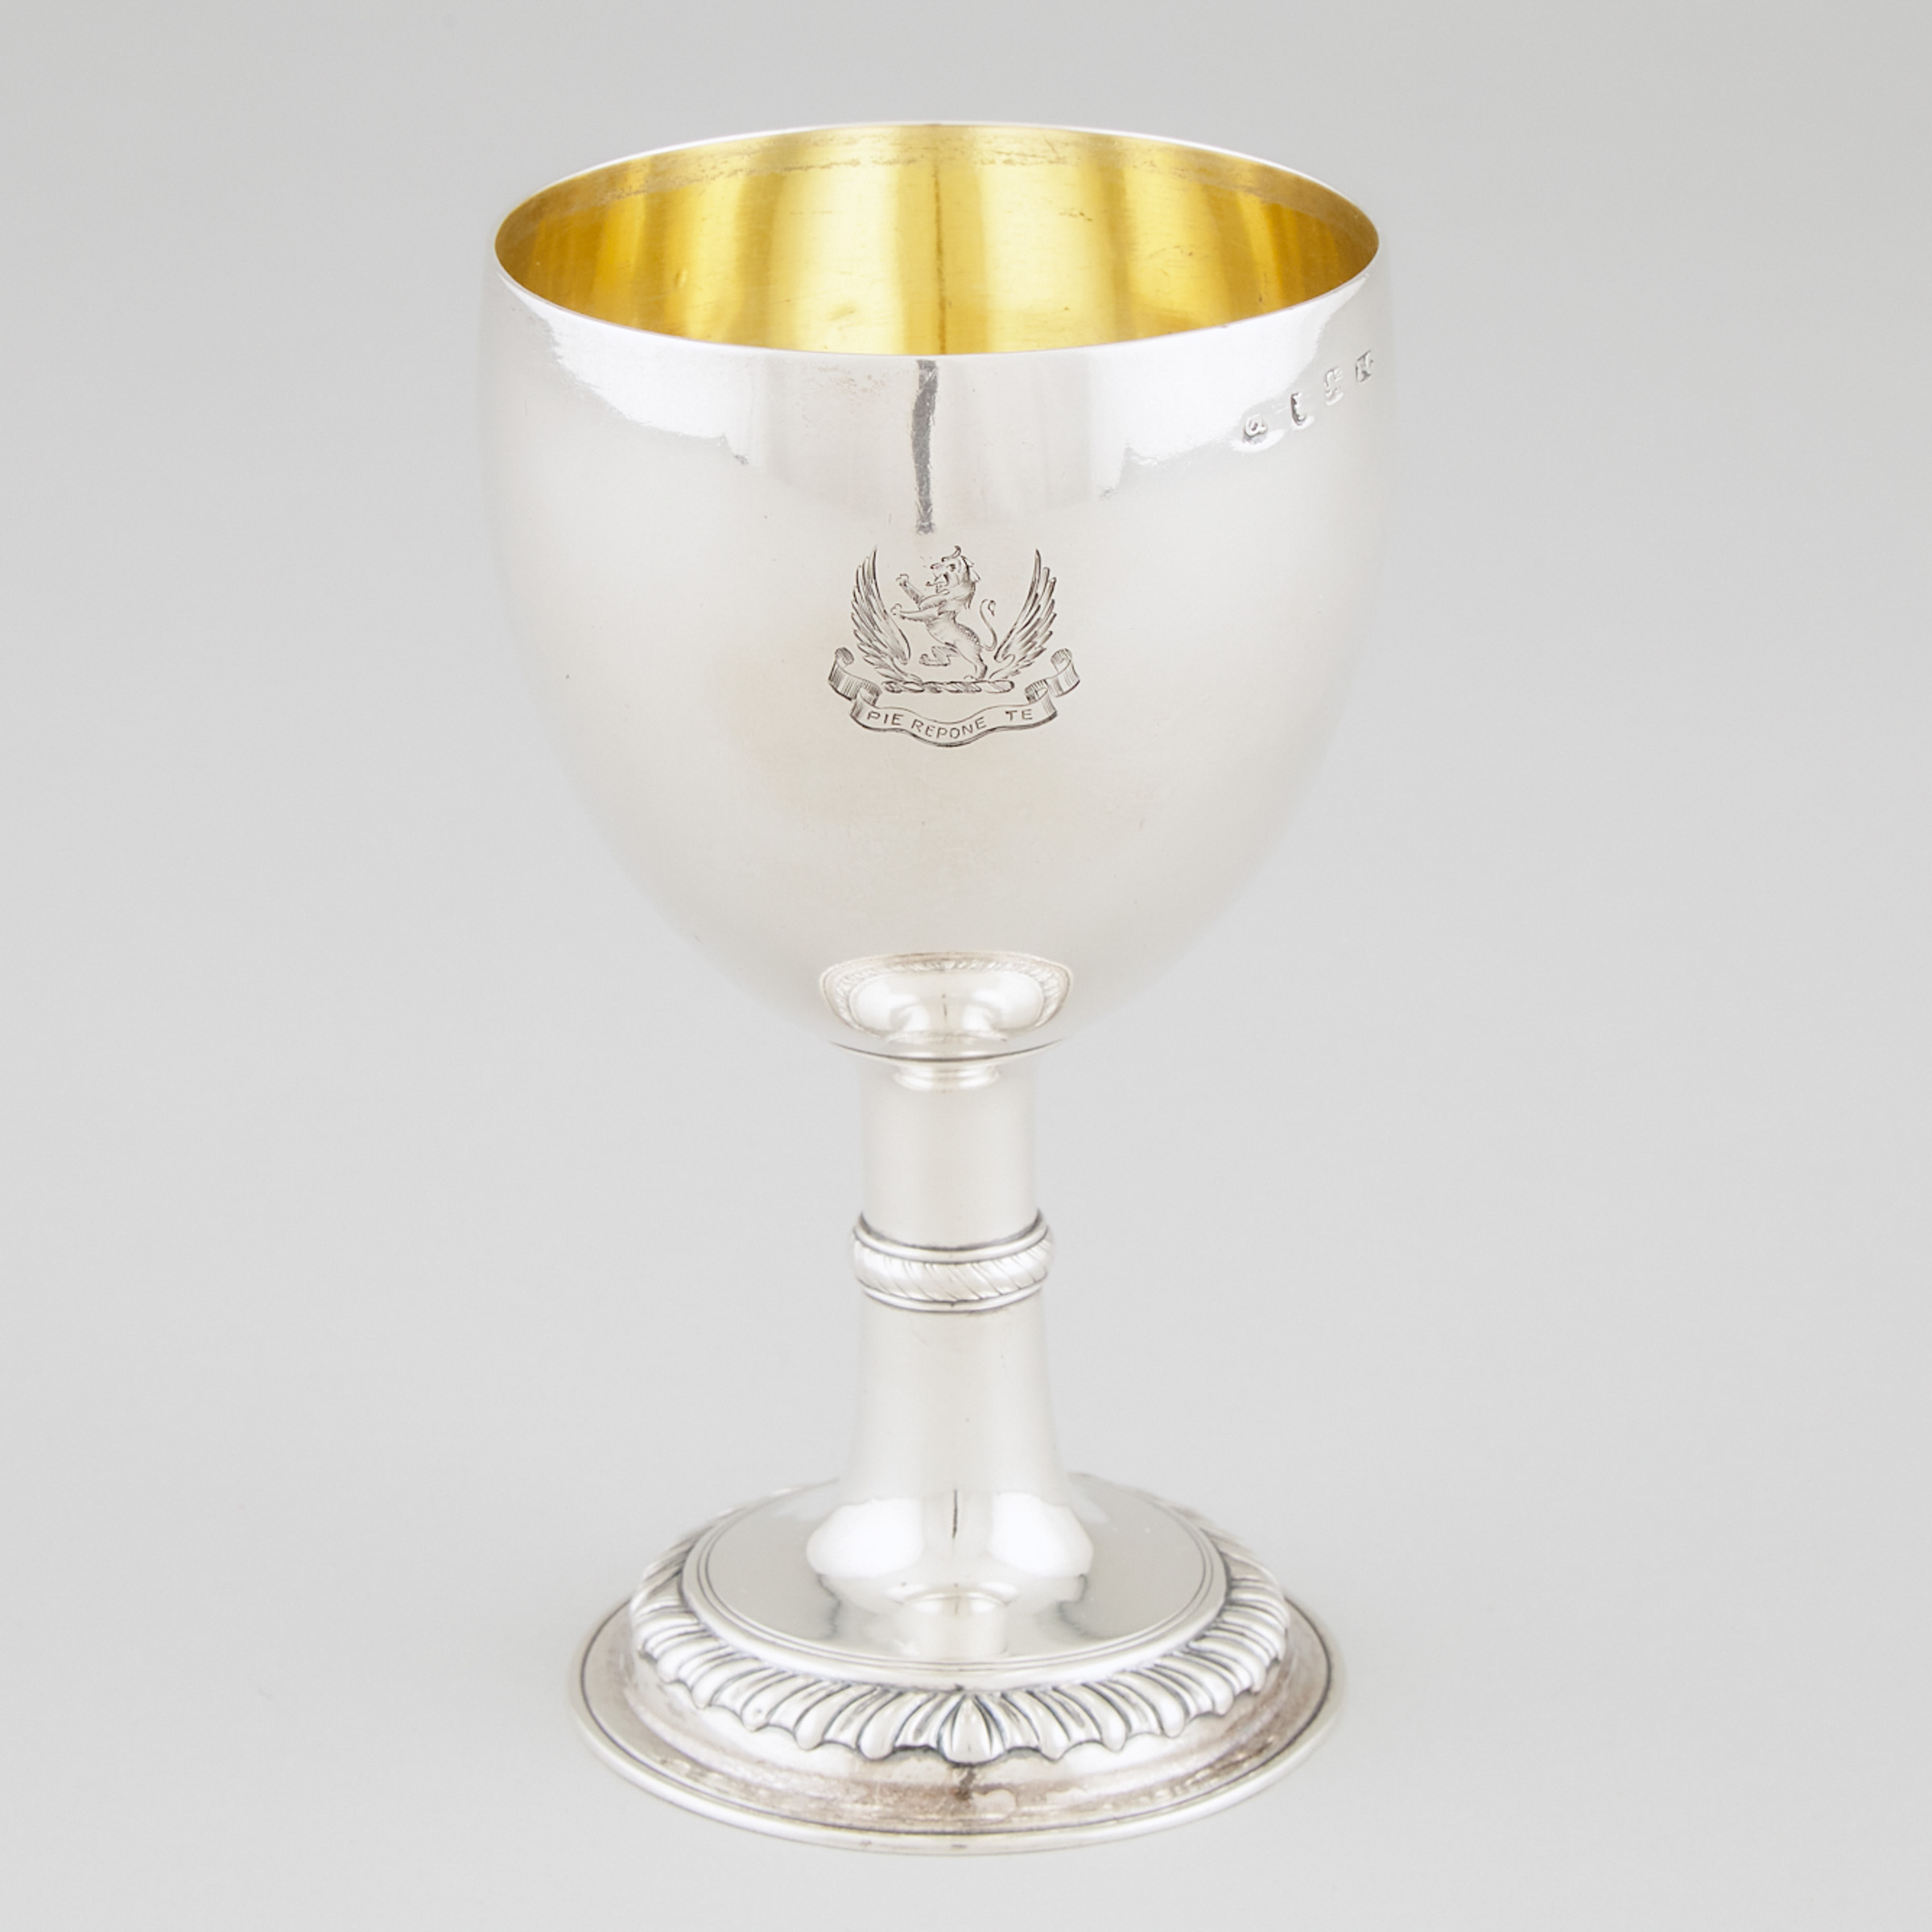 George III Silver Goblet, Francis Crump, London, 1771